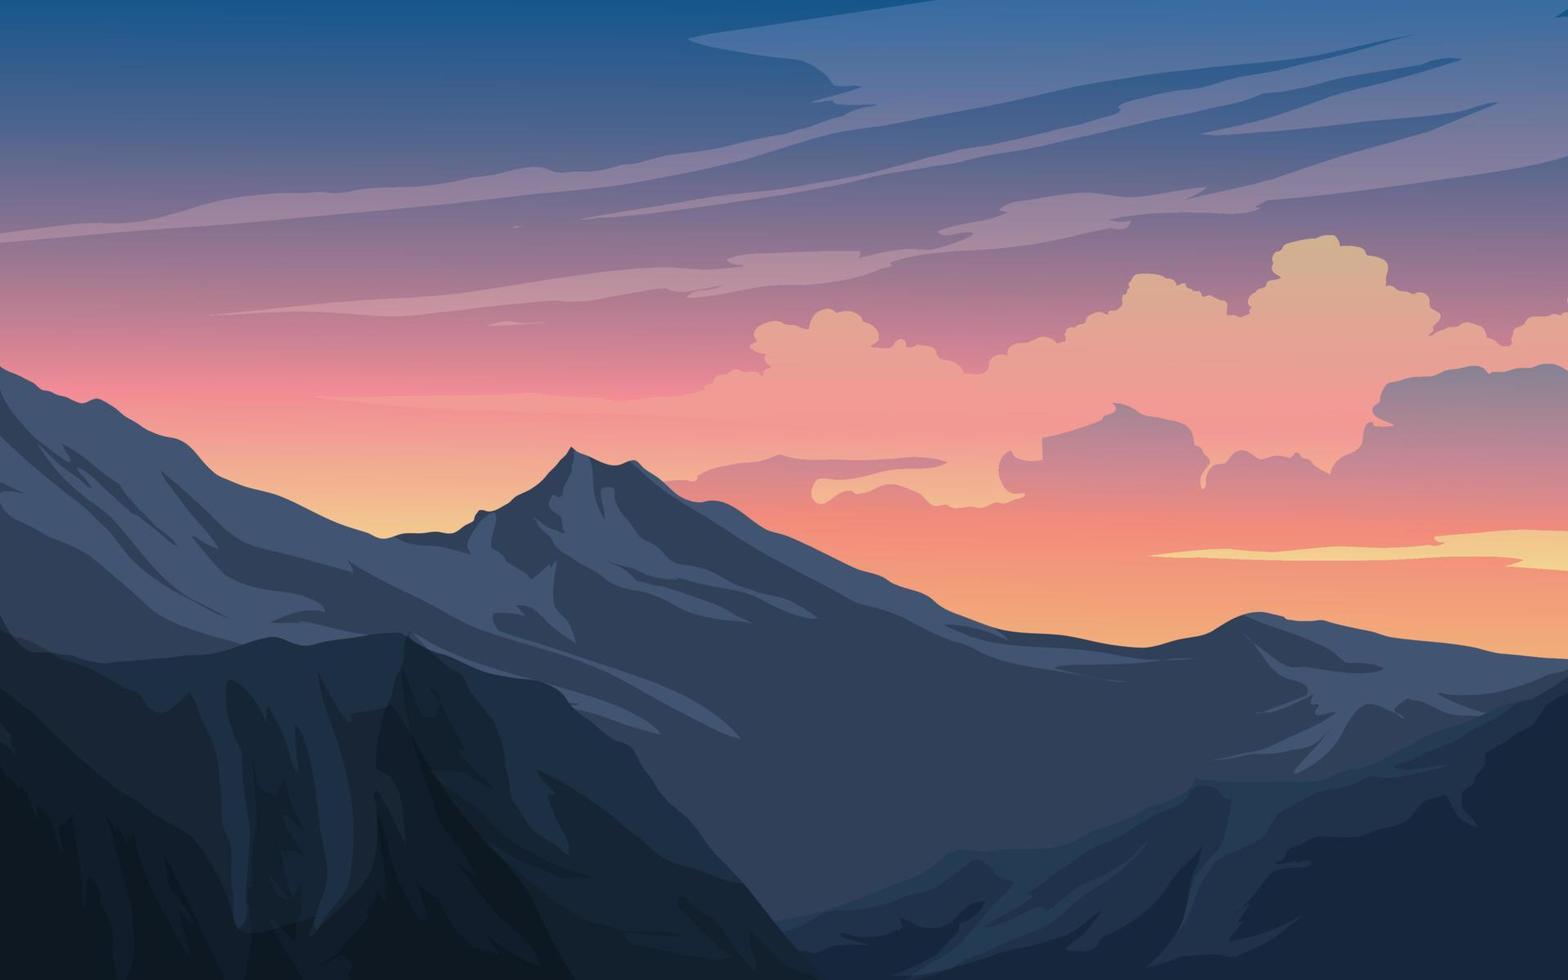 Mountain sunrise or sunset vector landscape